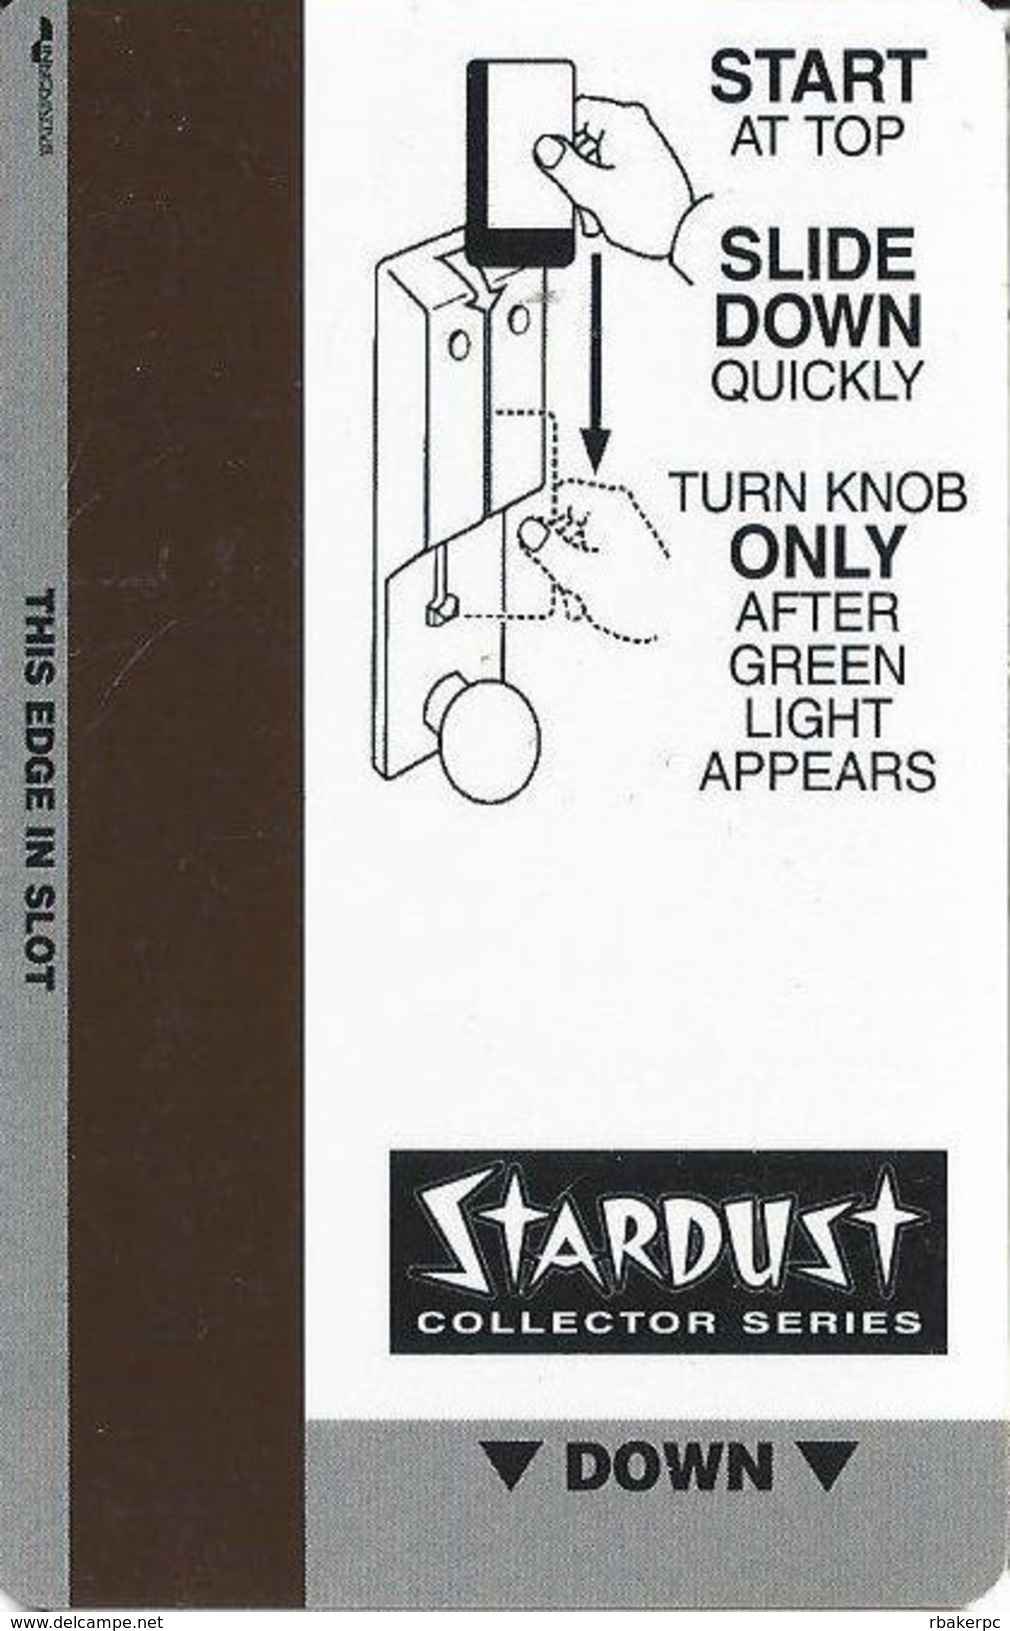 Stardust Casino - Las Vegas, NV - Hotel Room Key Card - Hotel Keycards